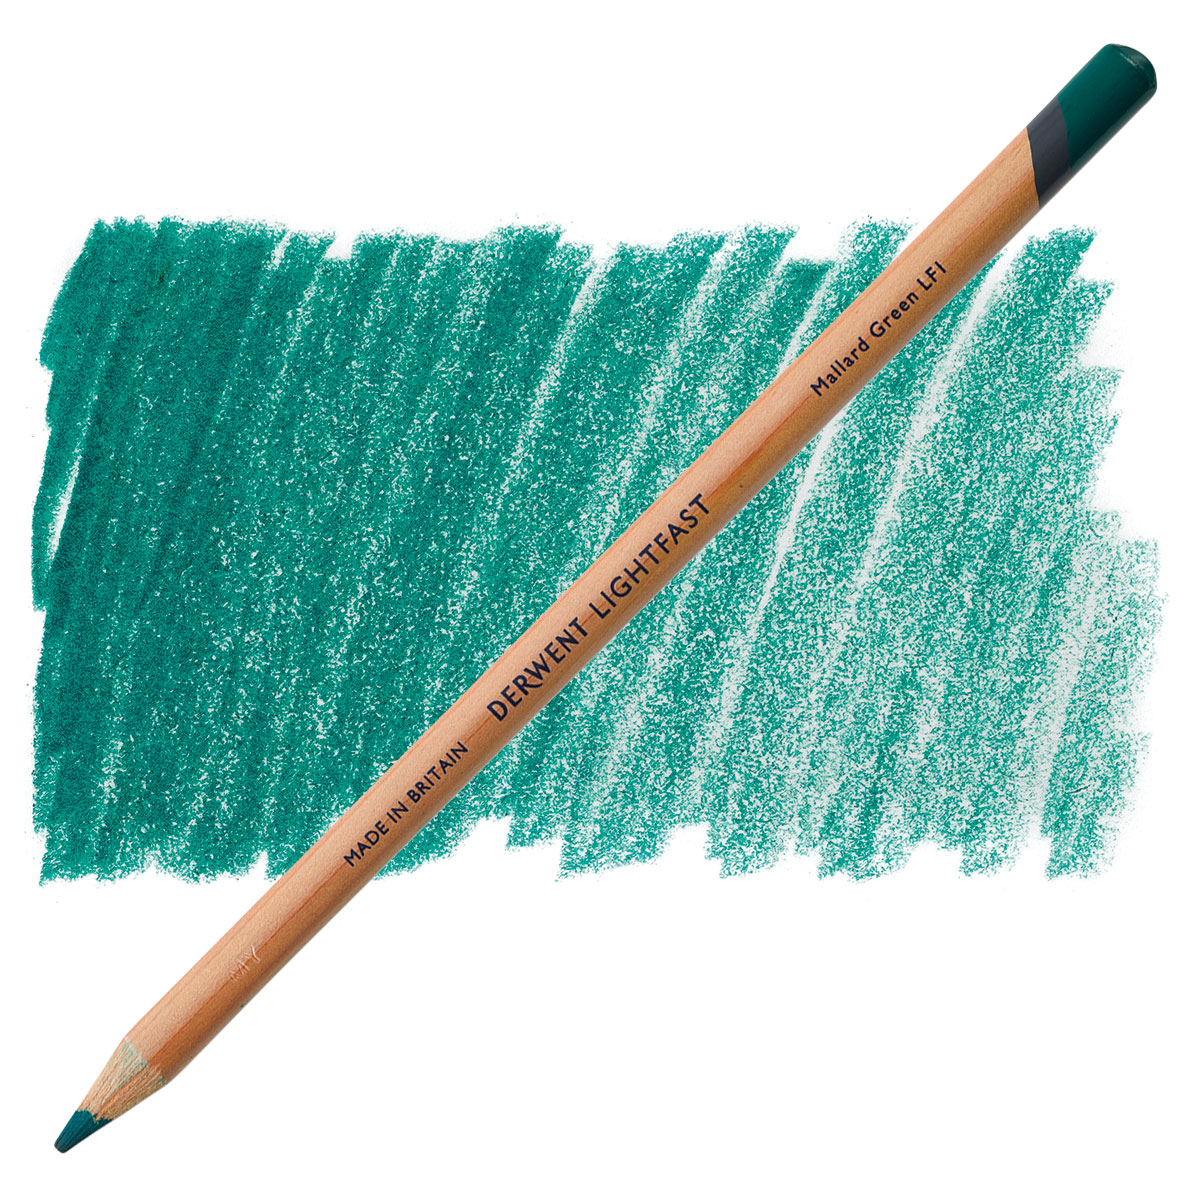 Derwent Lightfast Colored Pencil - Set of 24